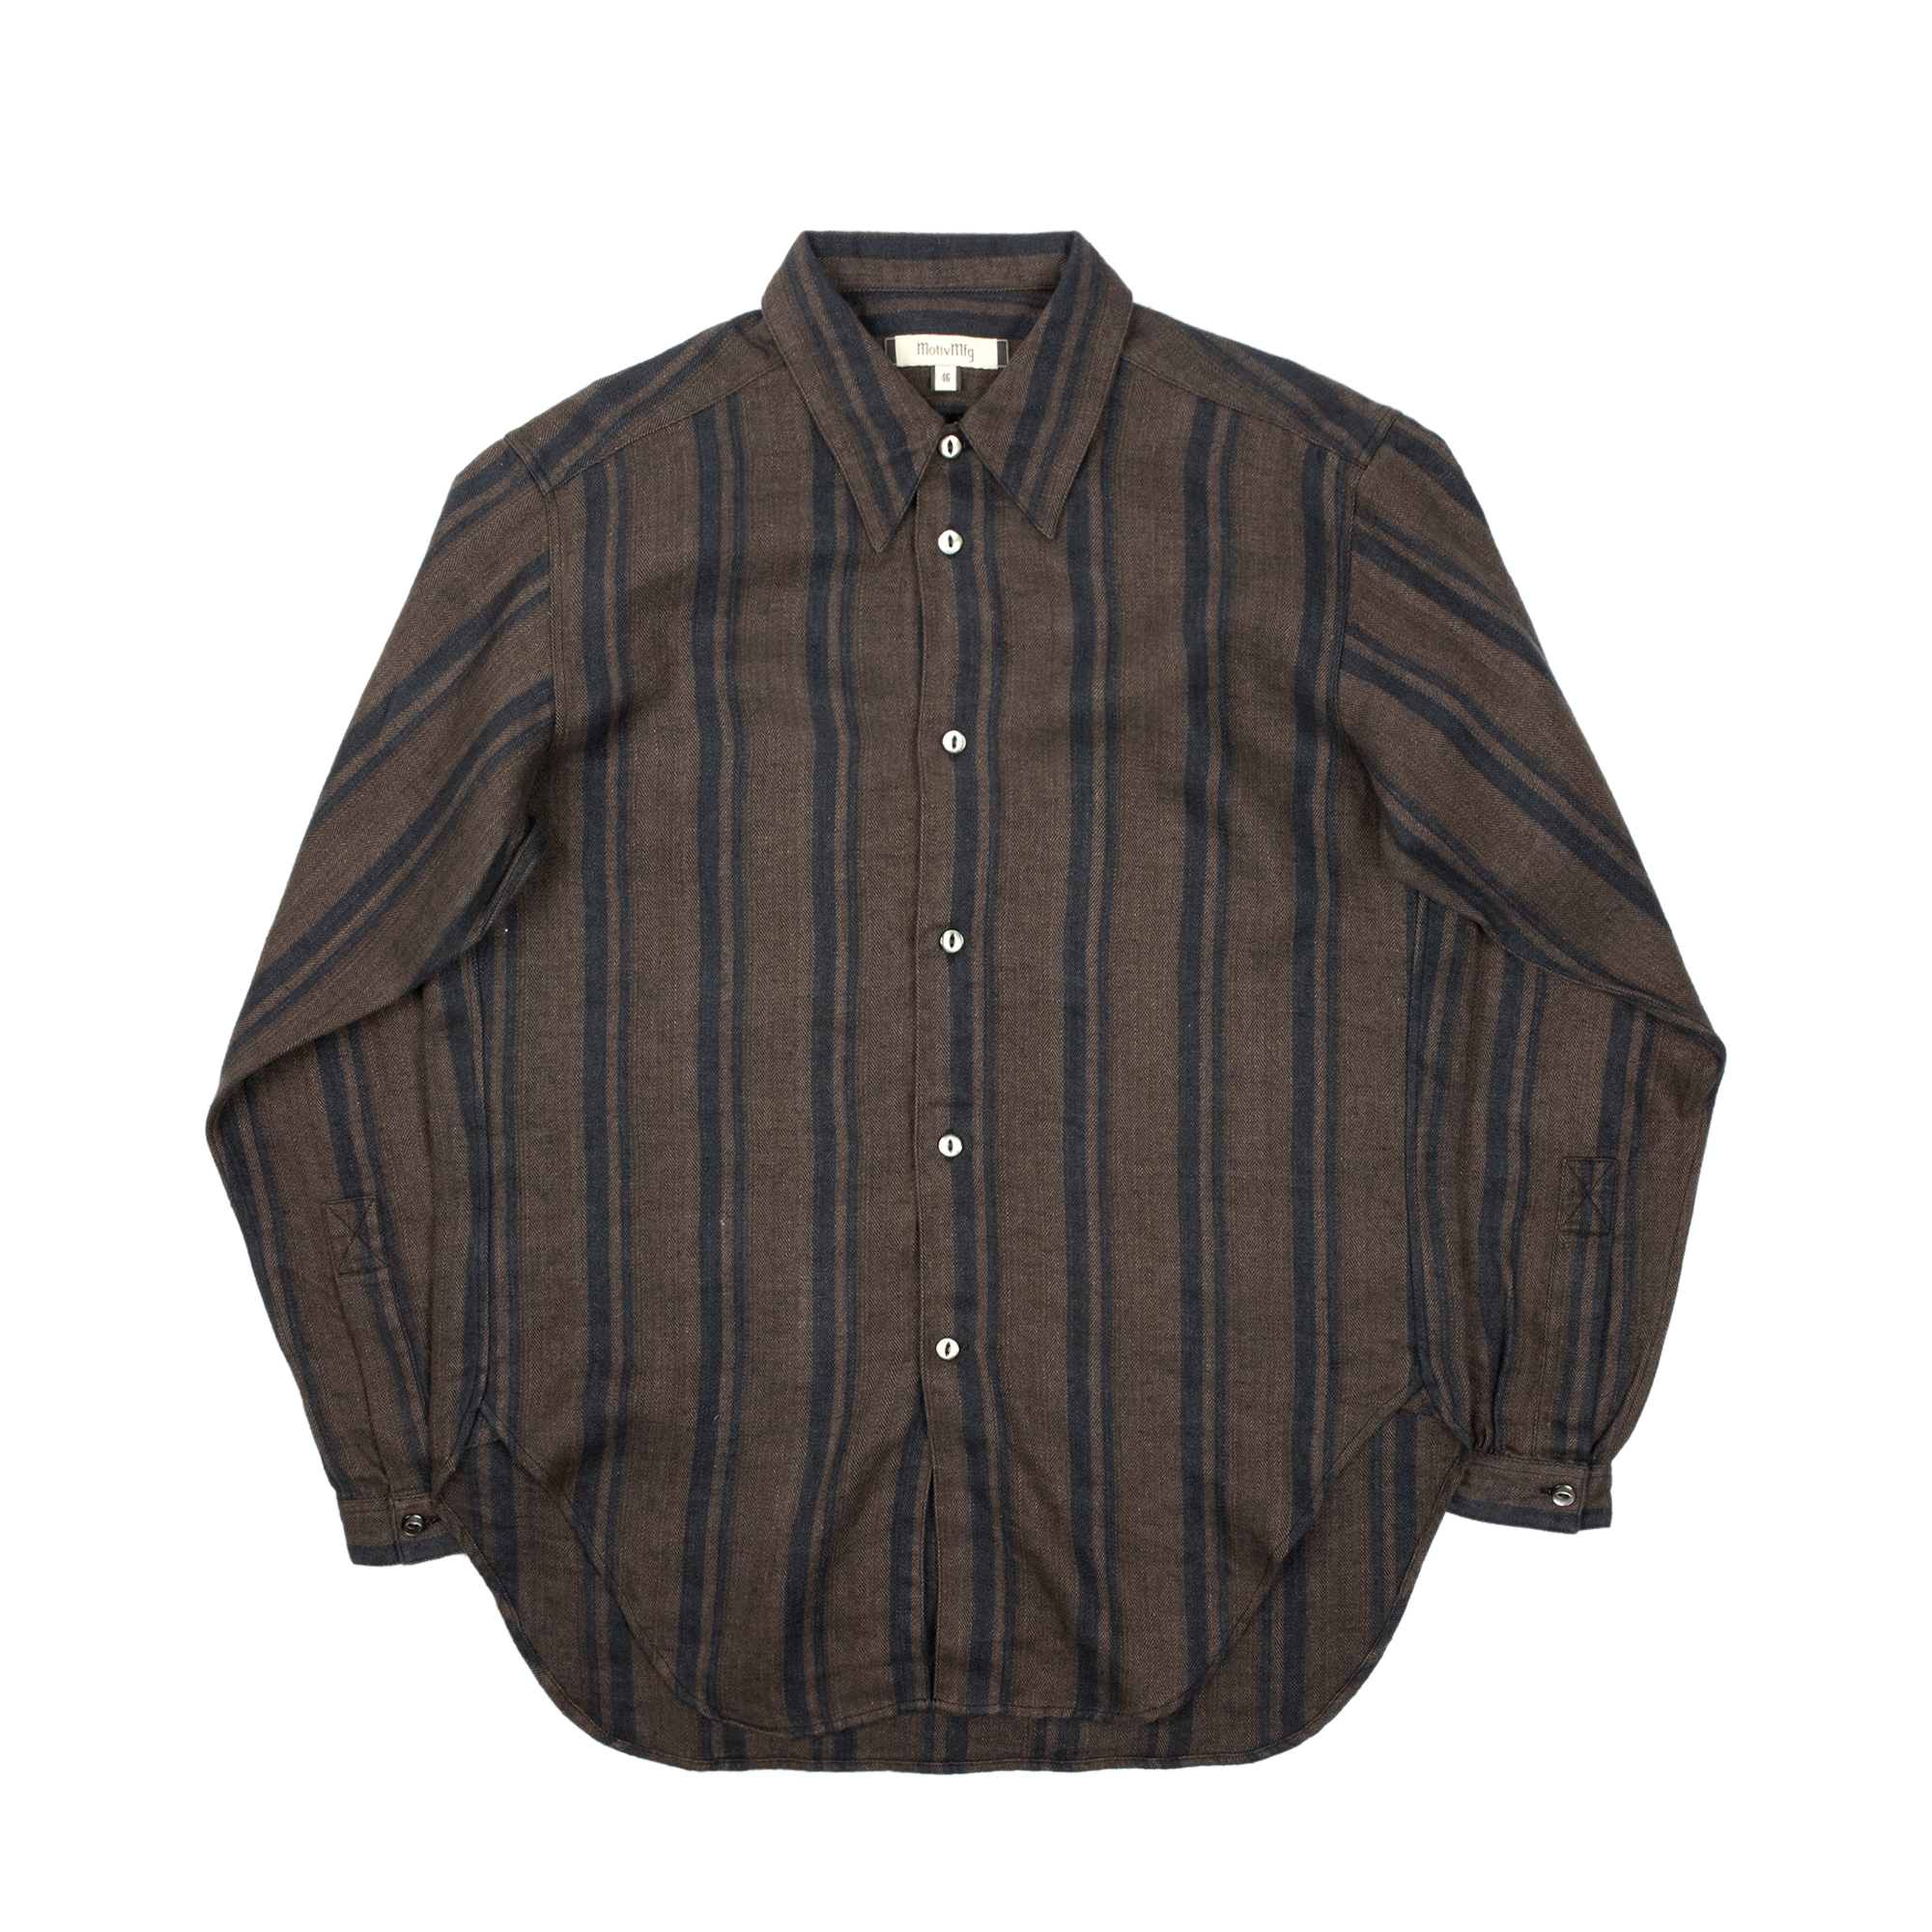 MotivMfg - Morgen Shirt (Black on Brown)